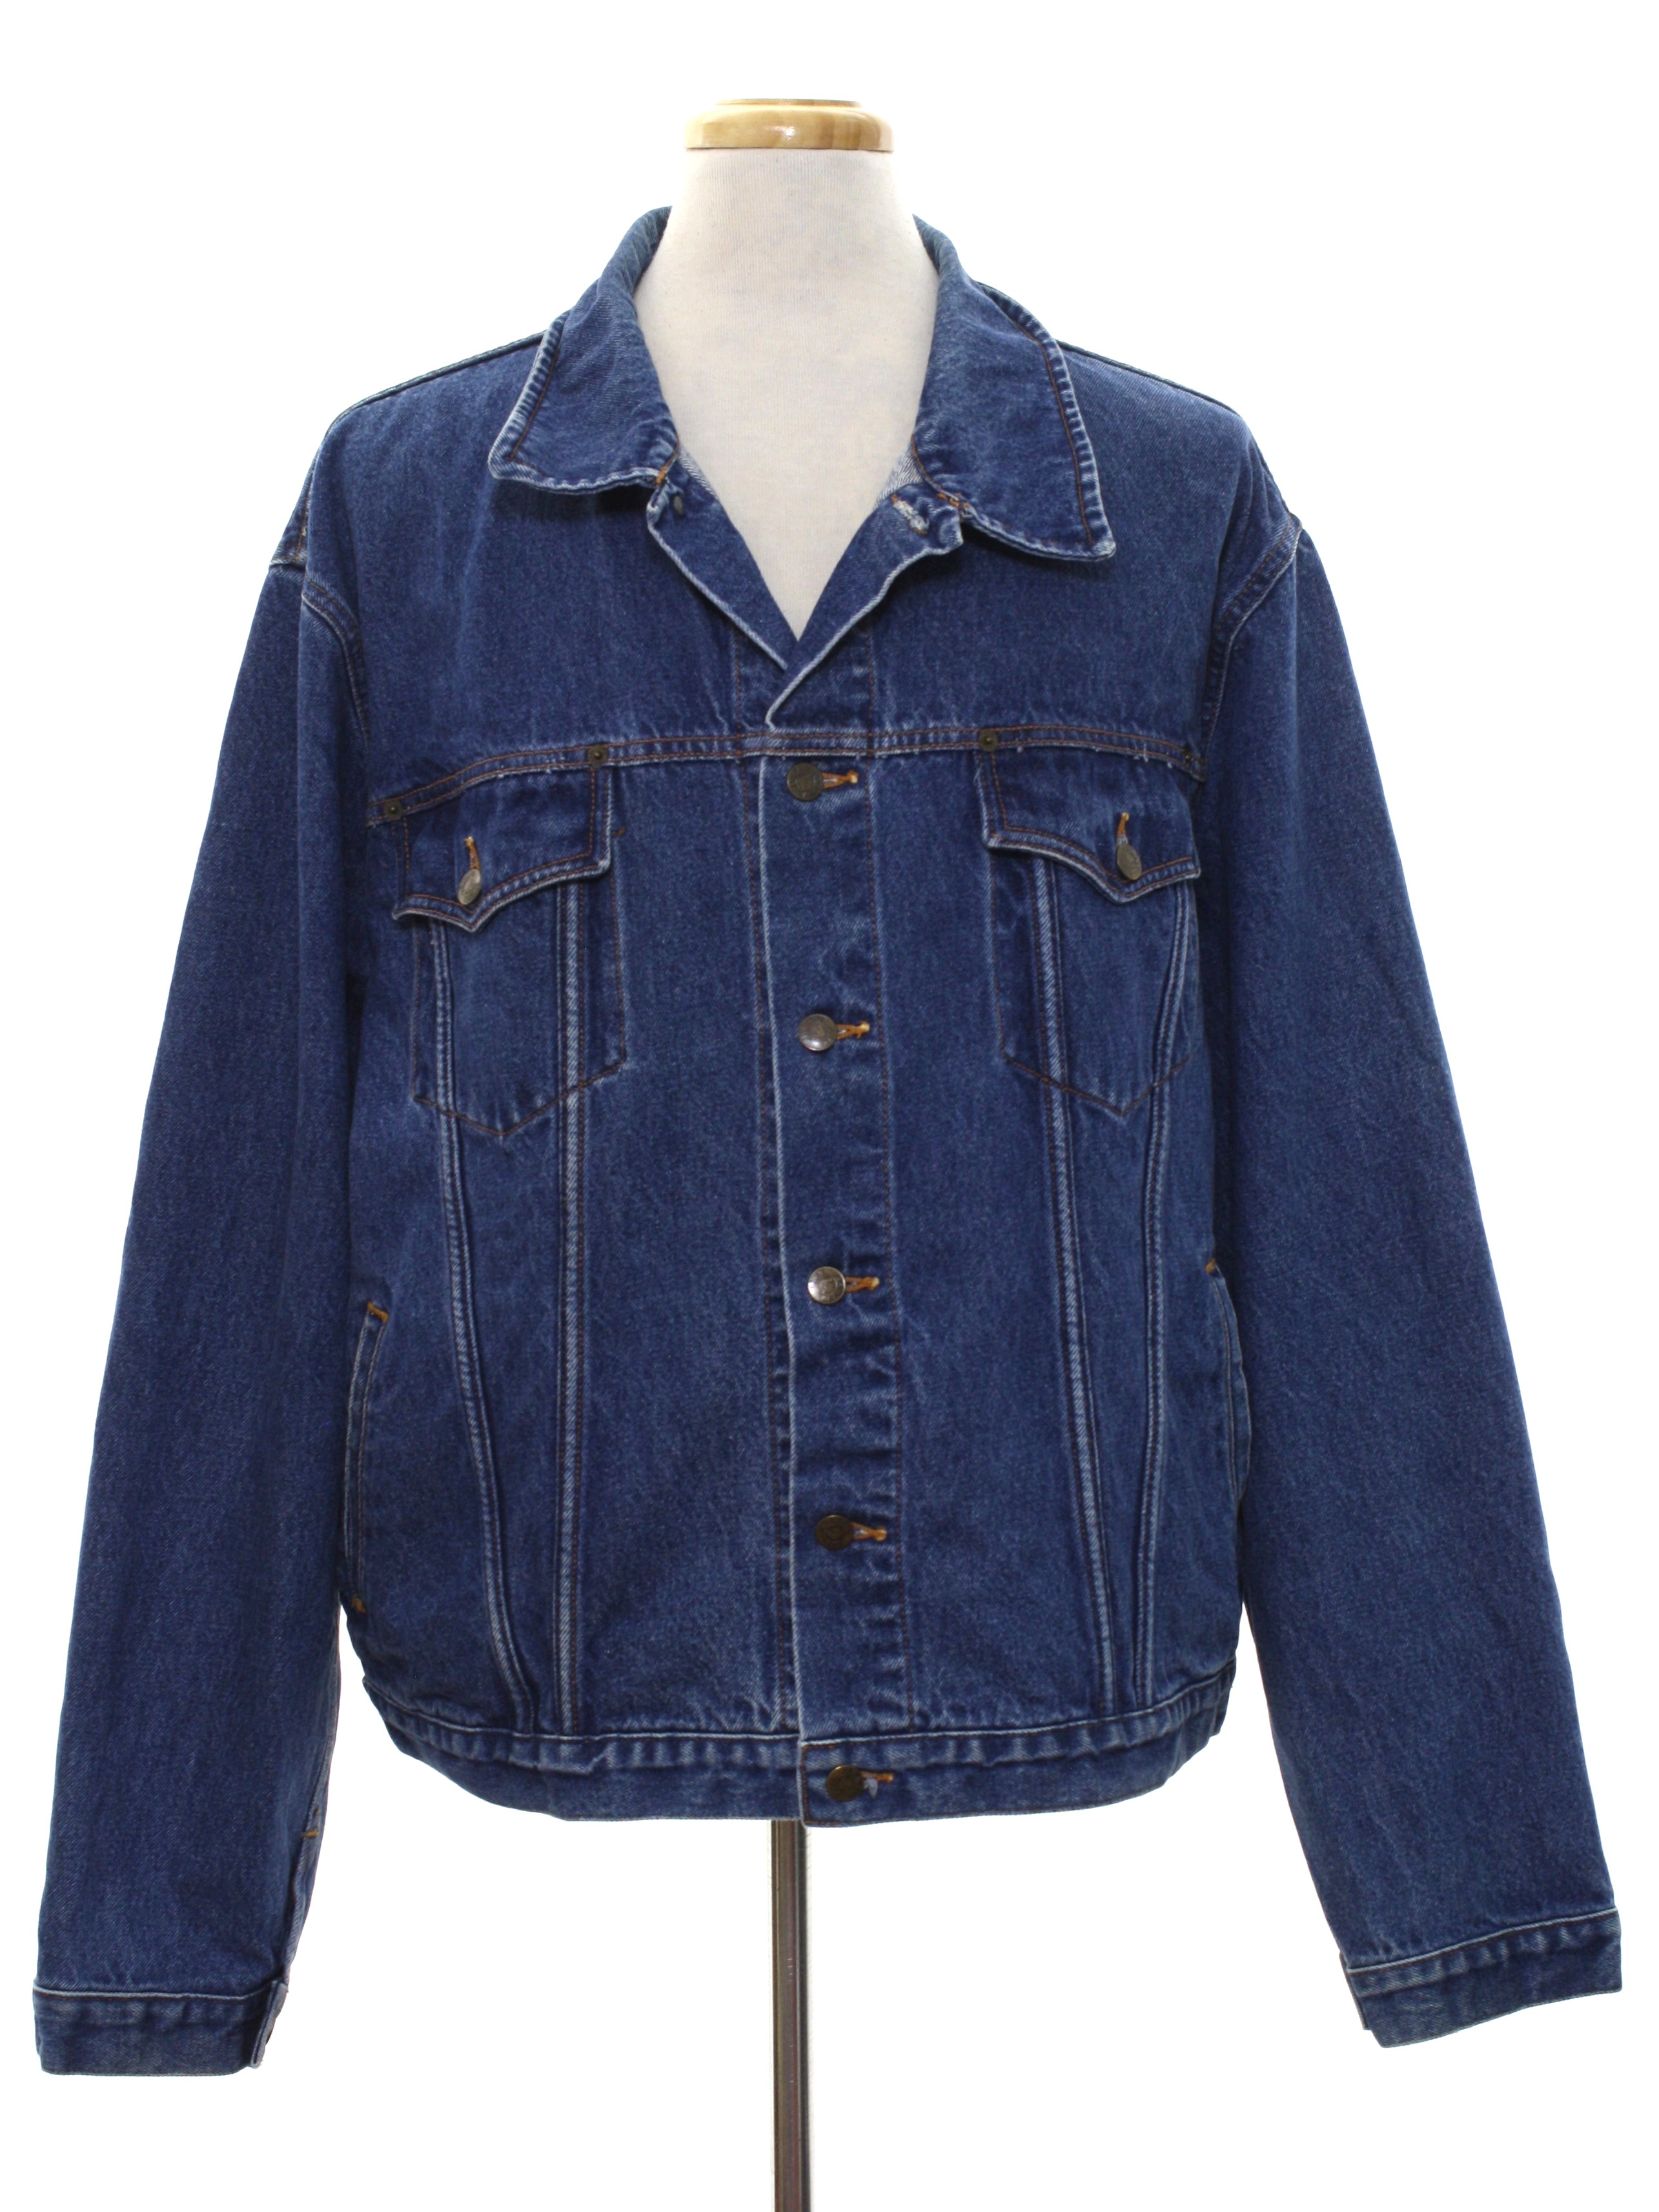 Retro Nineties Jacket: Early 90s -Armani Jeans- Mens dark blue